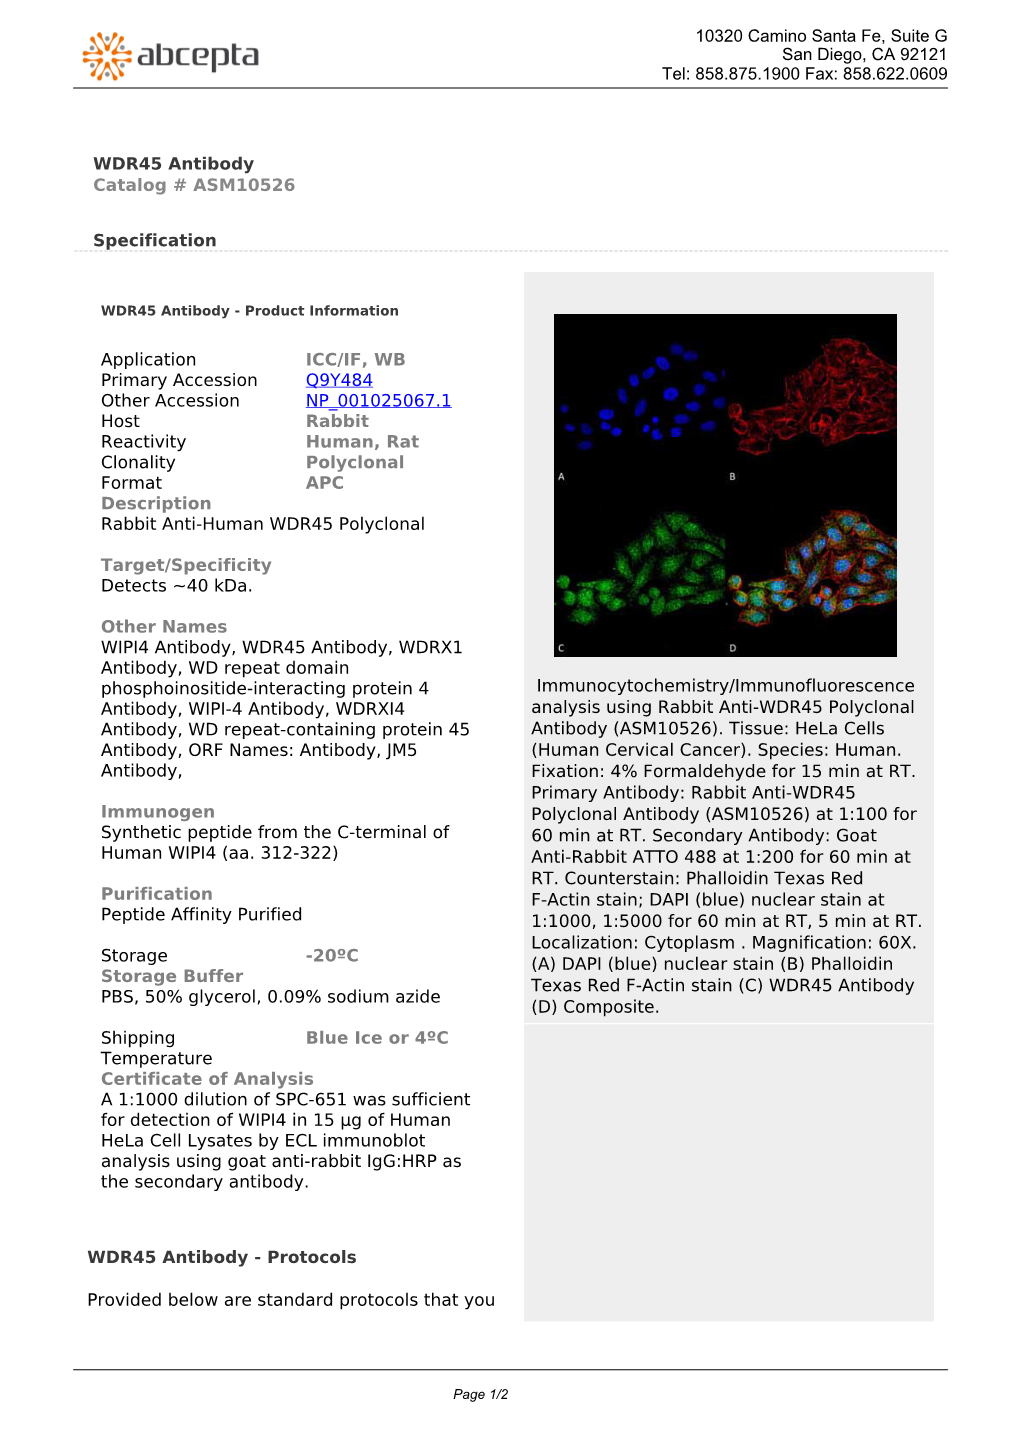 WDR45 Antibody Catalog # ASM10526